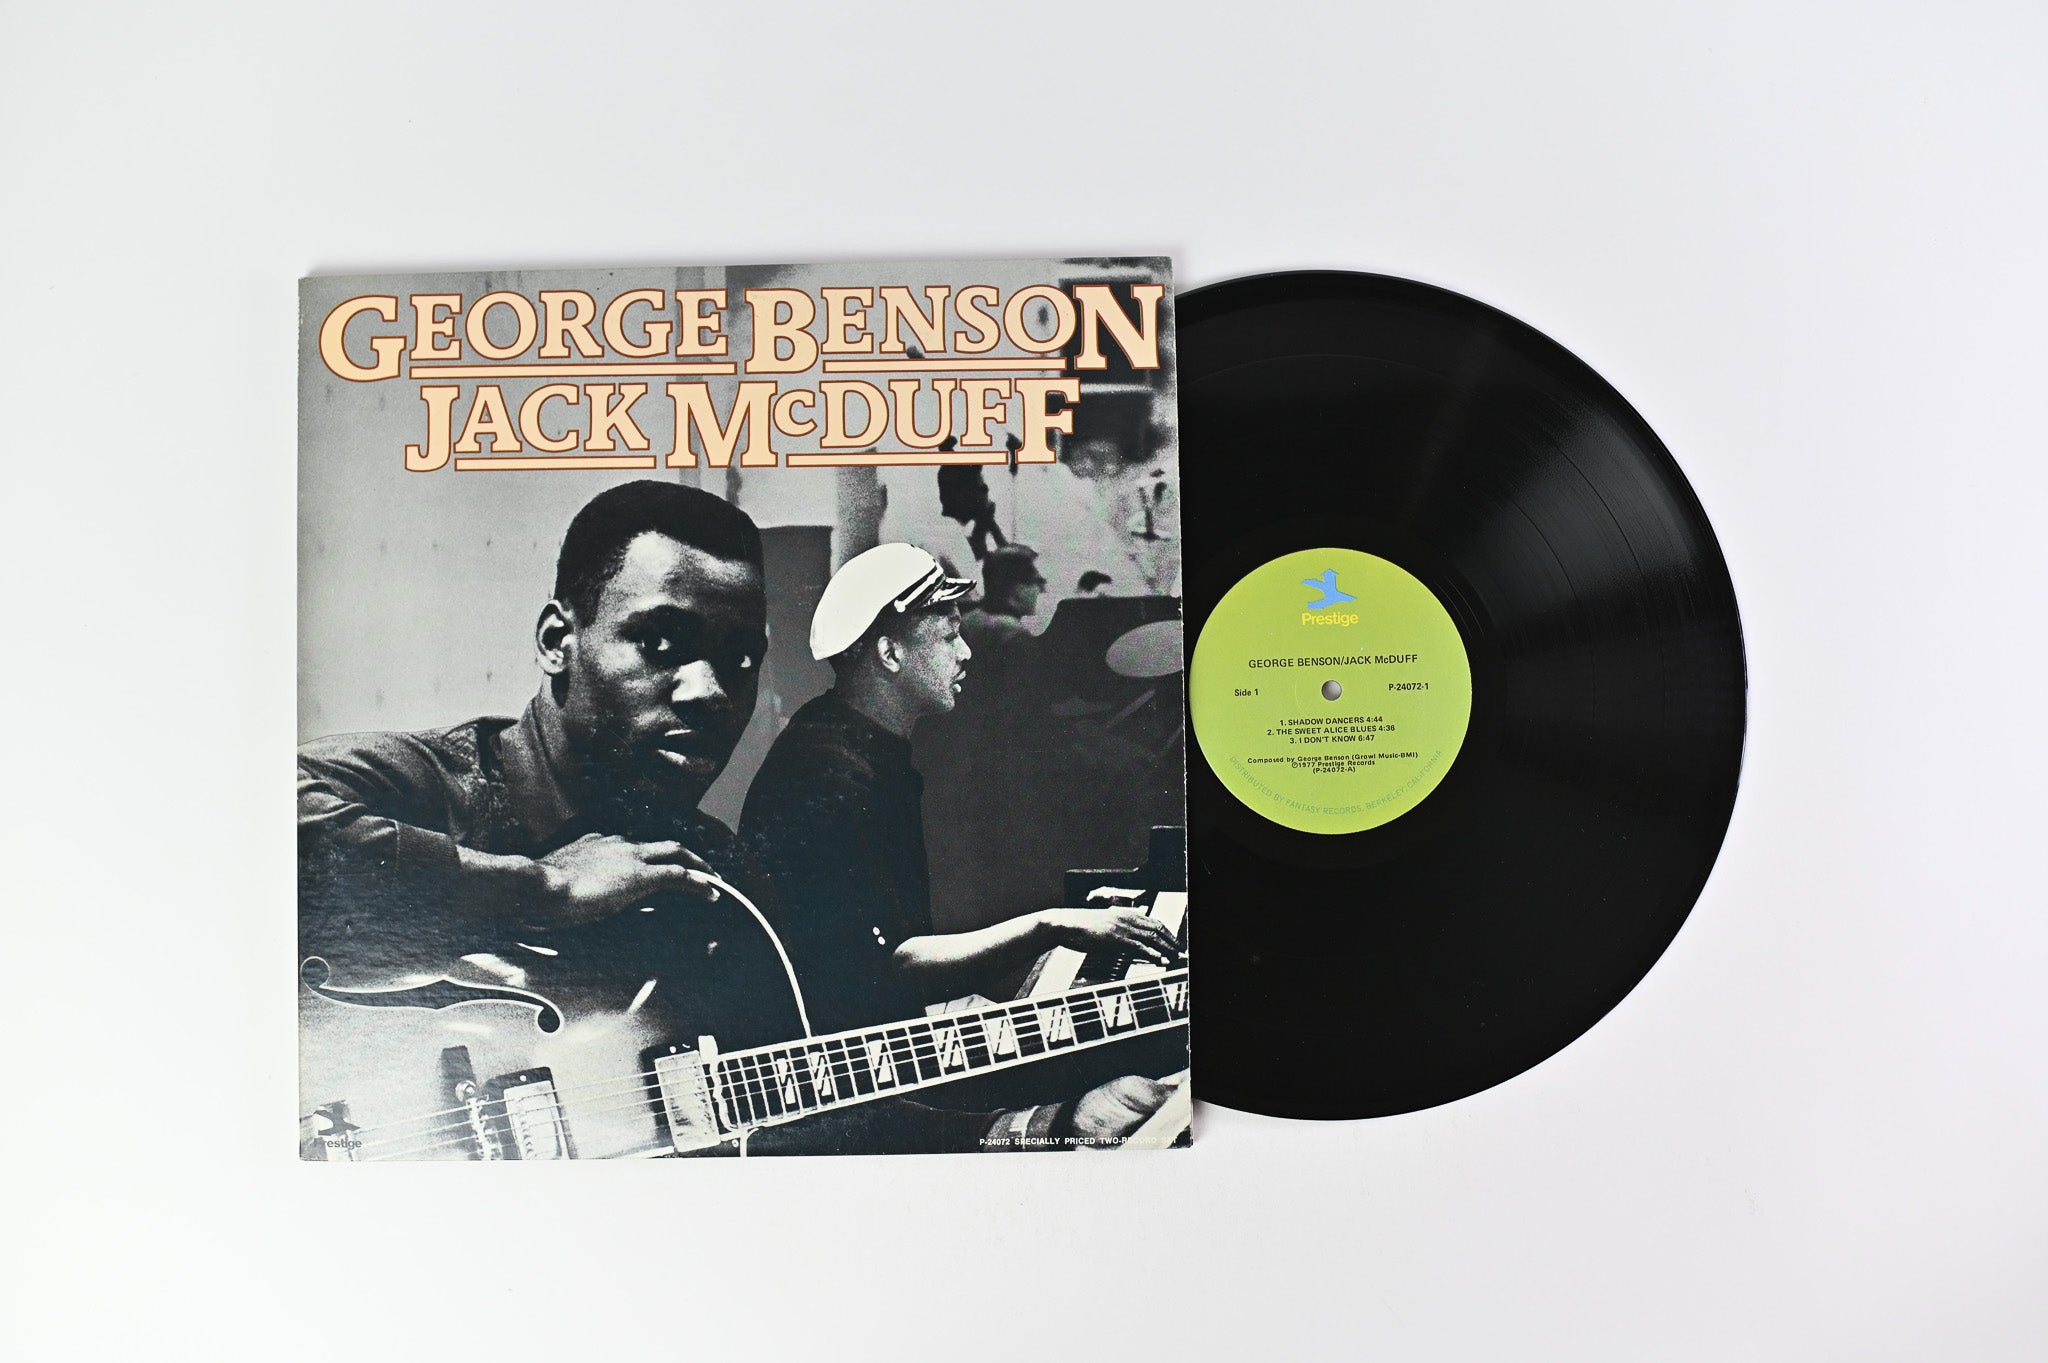 George Benson - George Benson / Jack McDuff on Prestige